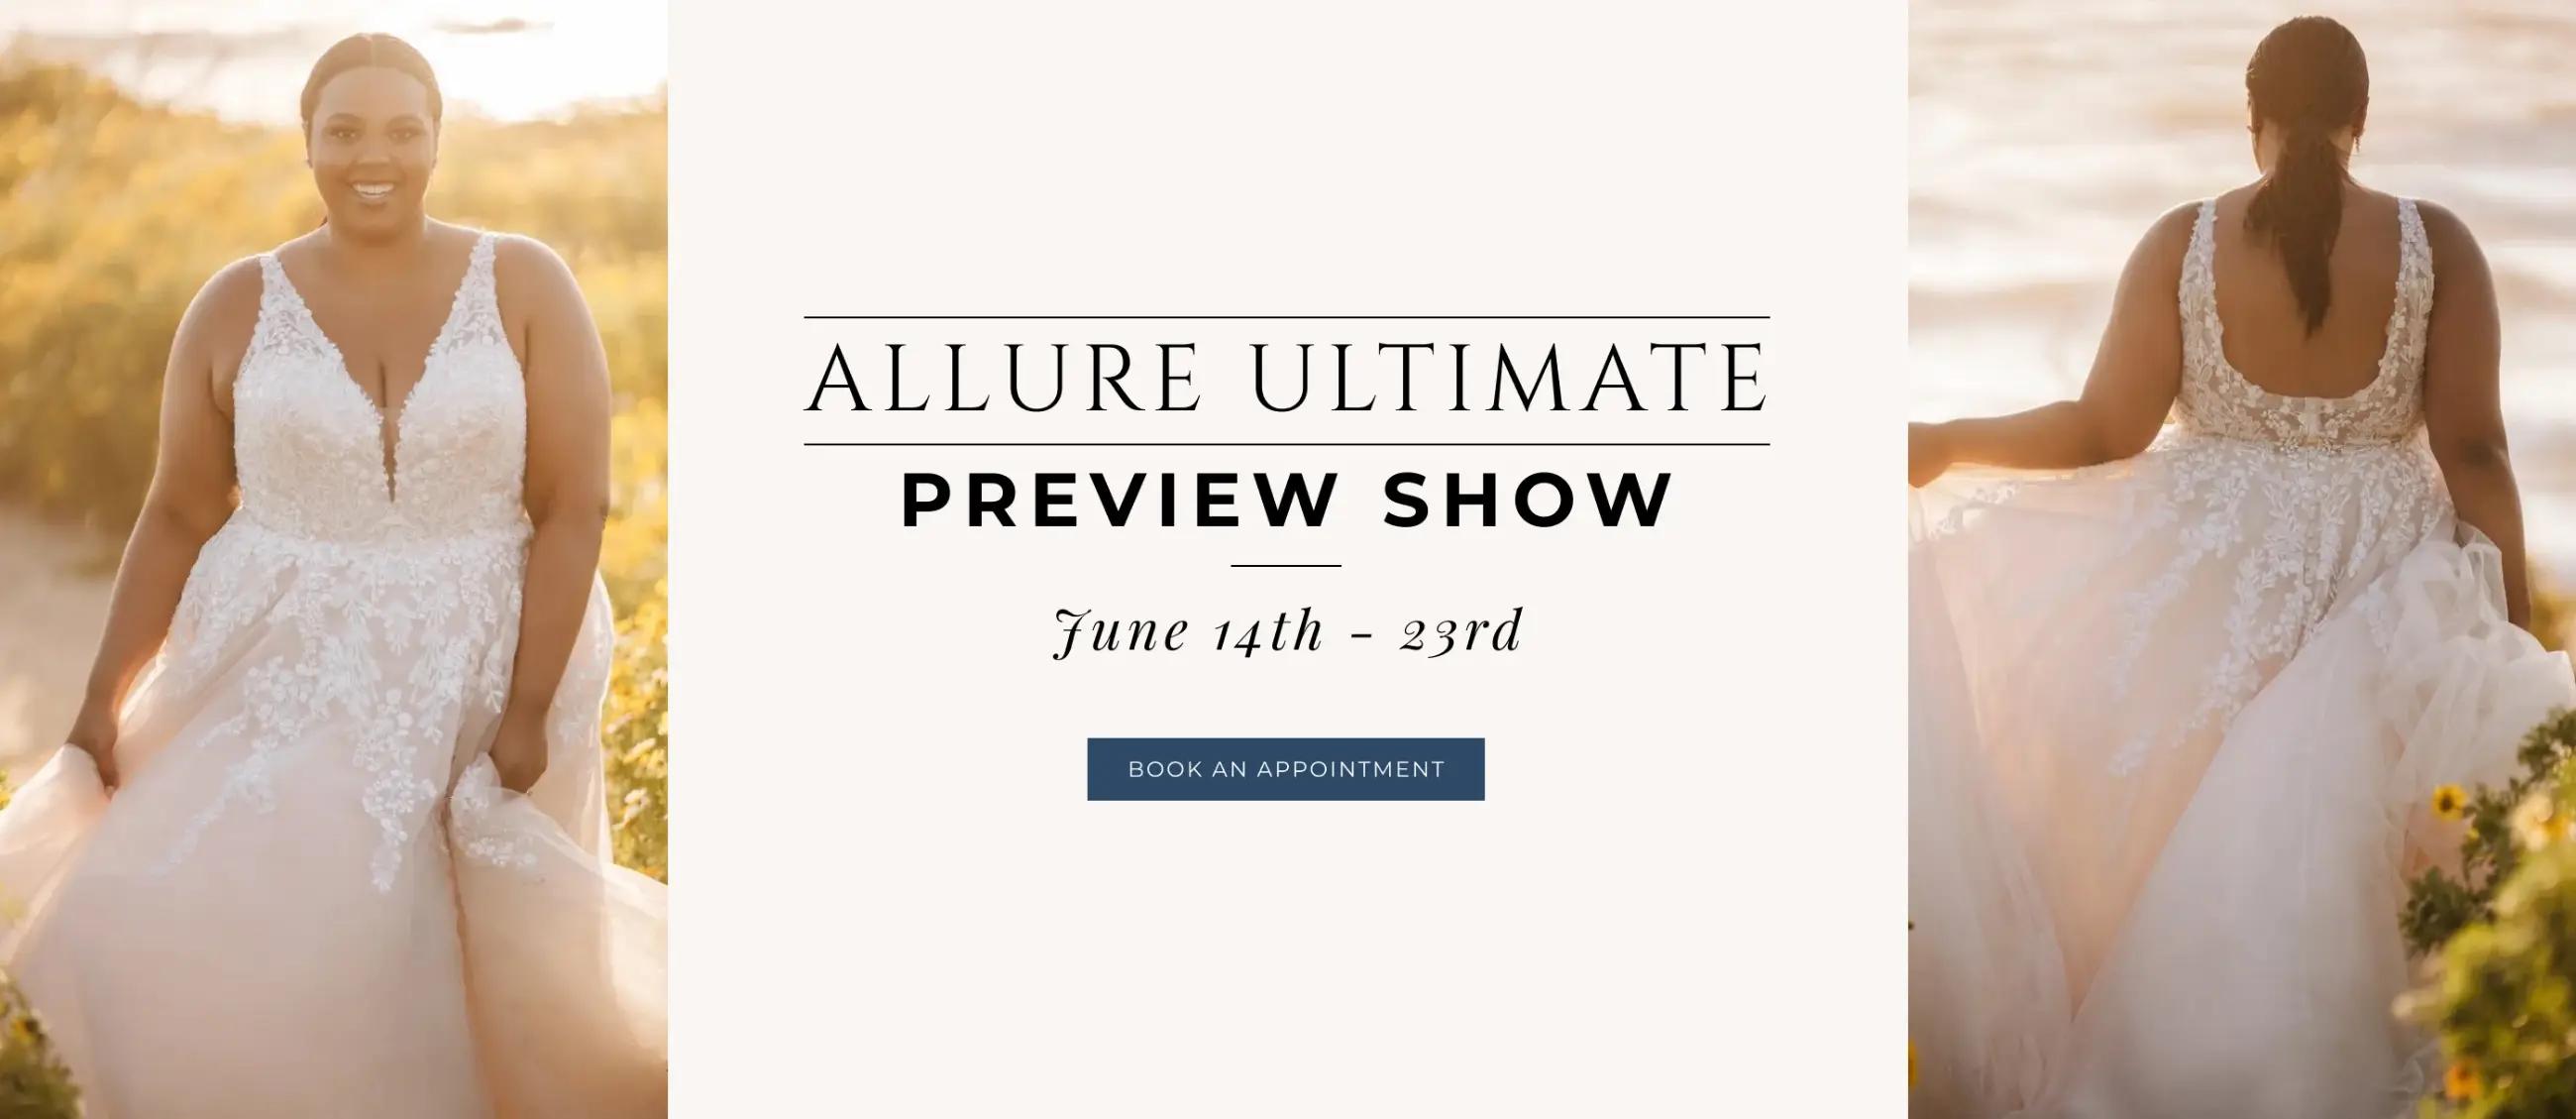 Allure Ultimate Preview Show Desktop Banner